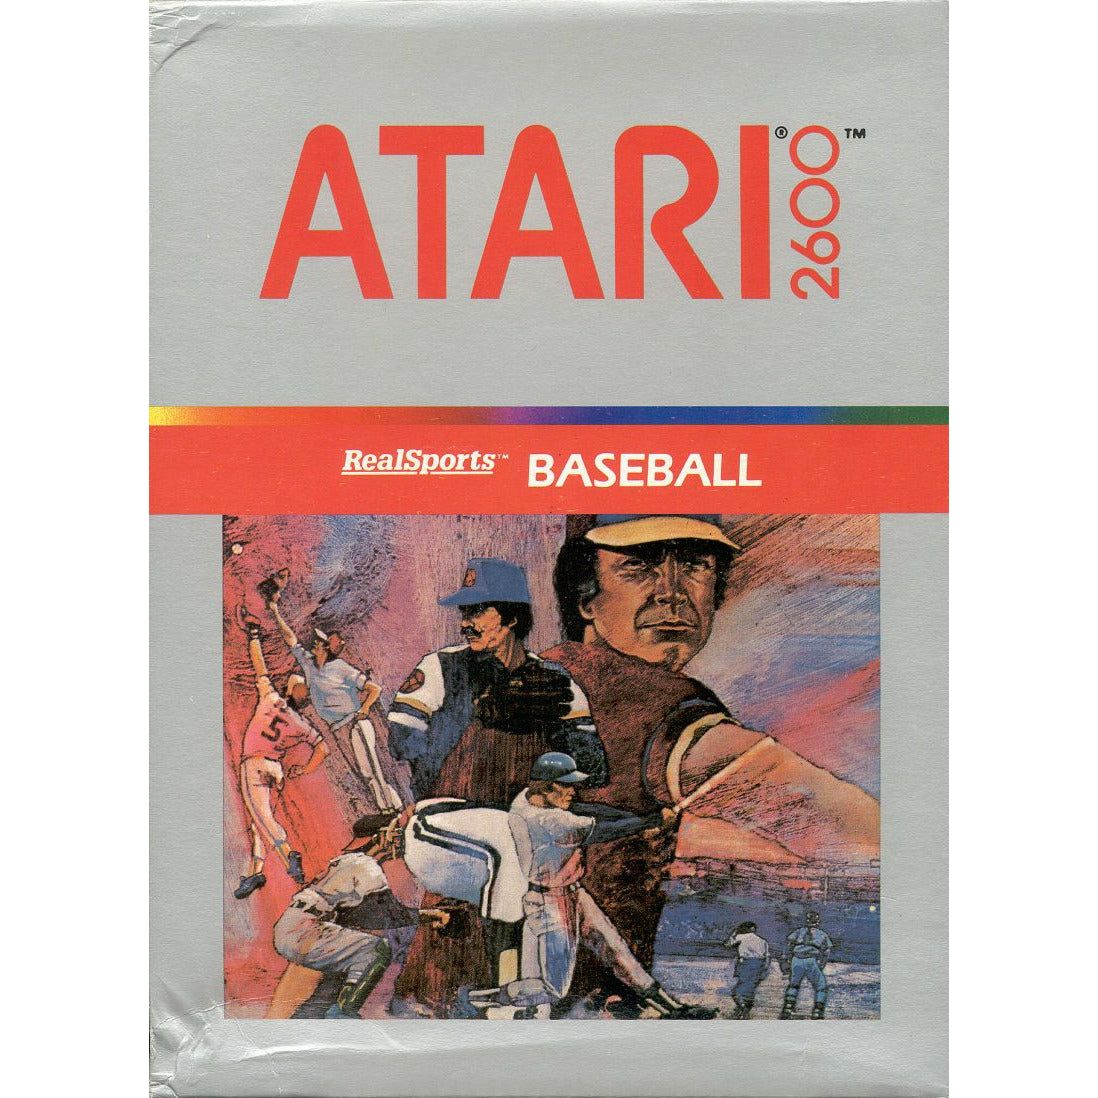 Atari 2600 - RealSports Baseball (Cartridge Only)